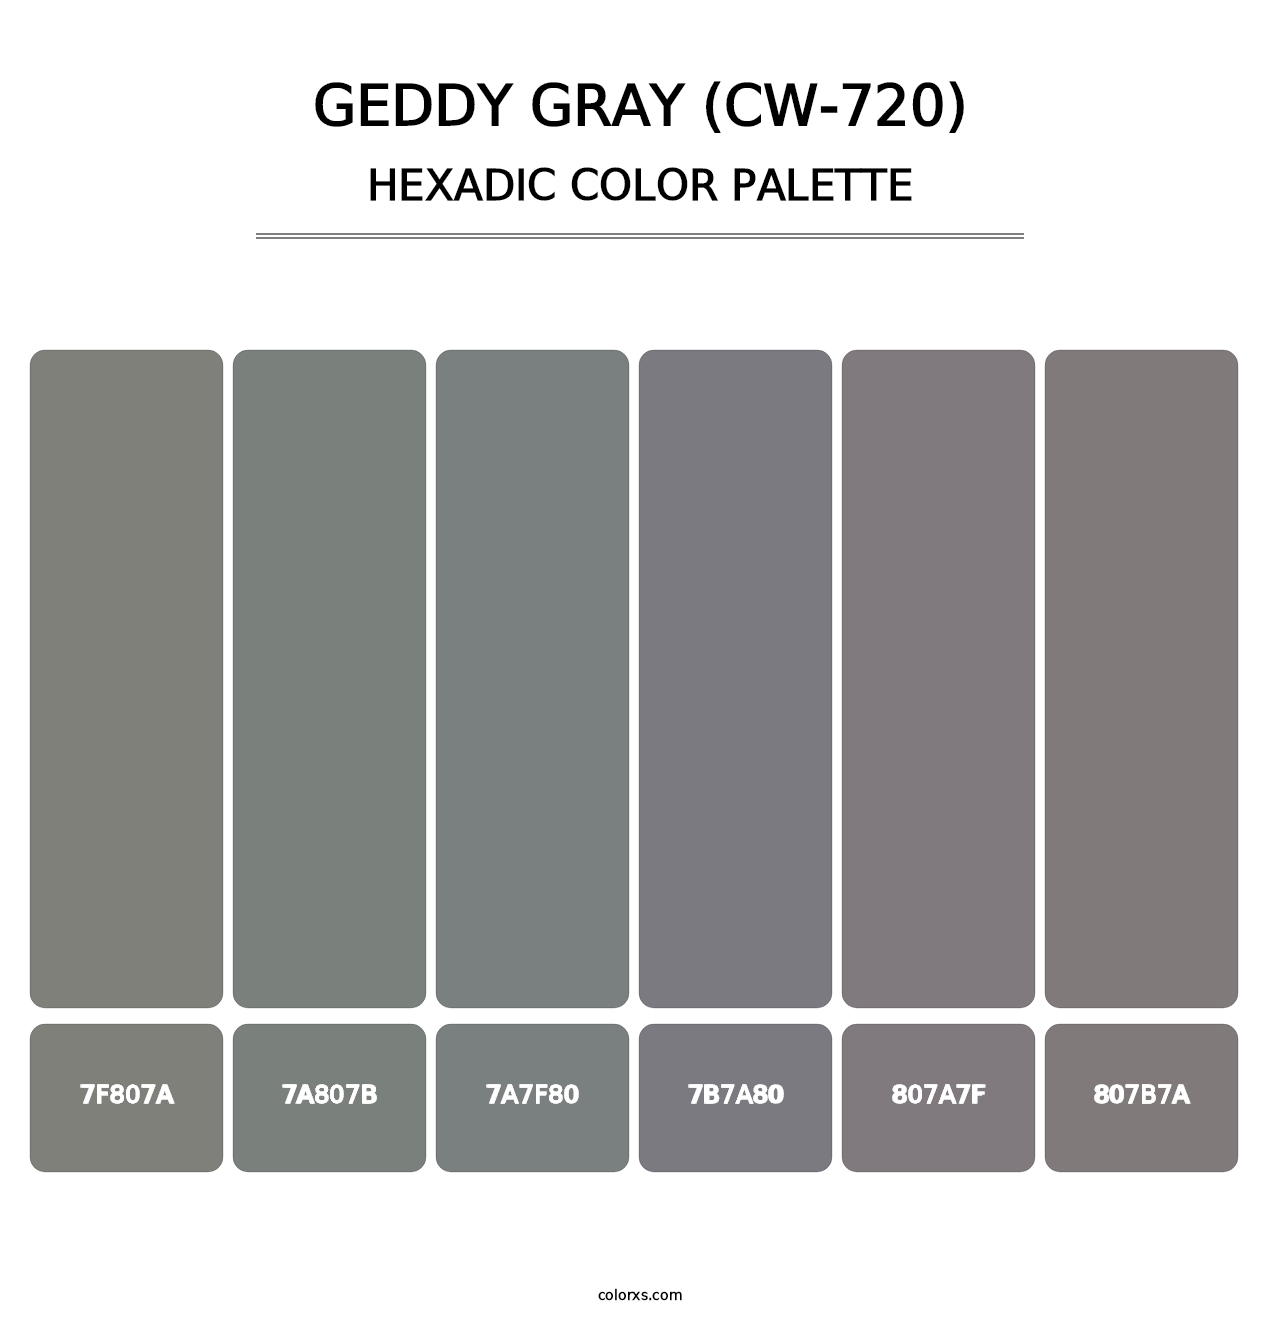 Geddy Gray (CW-720) - Hexadic Color Palette